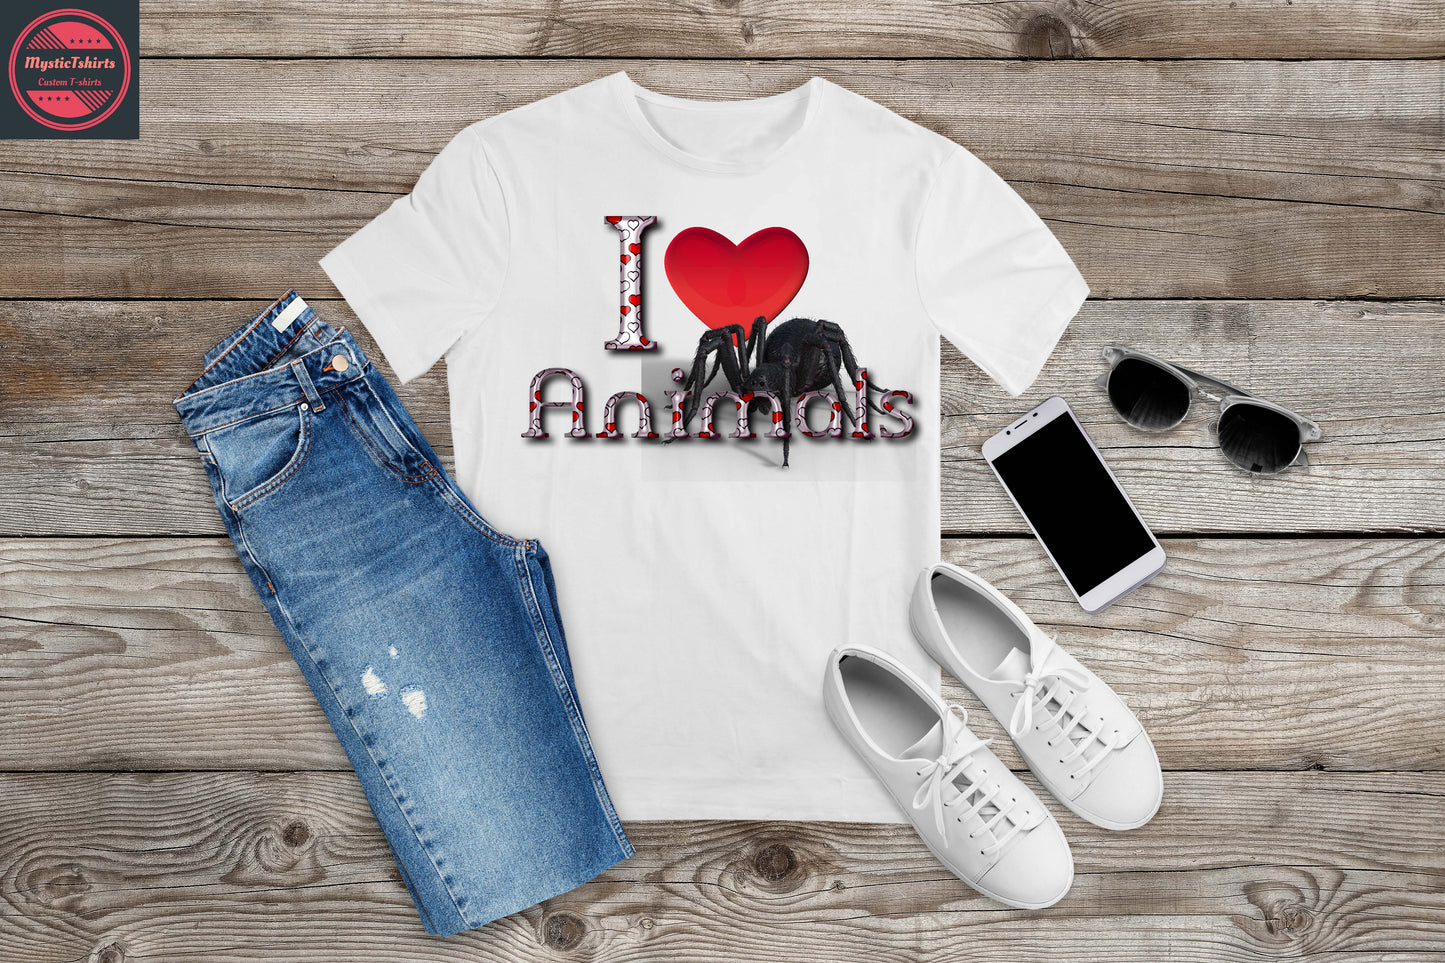 215. I LOVE ANIMALS , Custom Made Shirt, Personalized T-Shirt, Custom Text, Make Your Own Shirt, Custom Tee